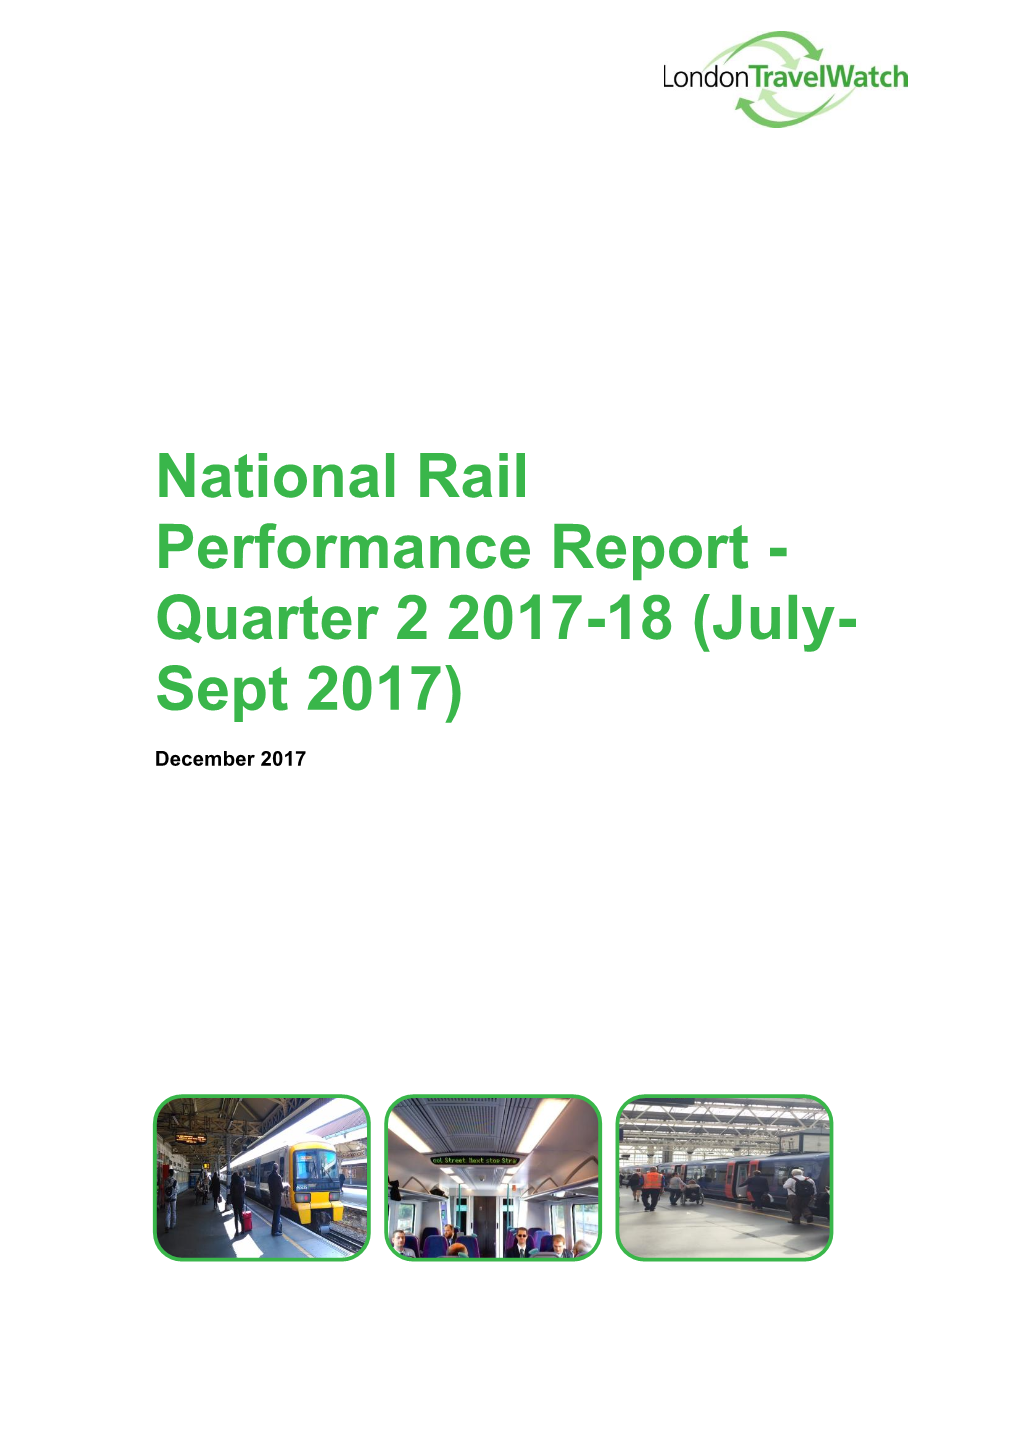 National Rail Performance Report - Quarter 2 2017-18 (July- Sept 2017)